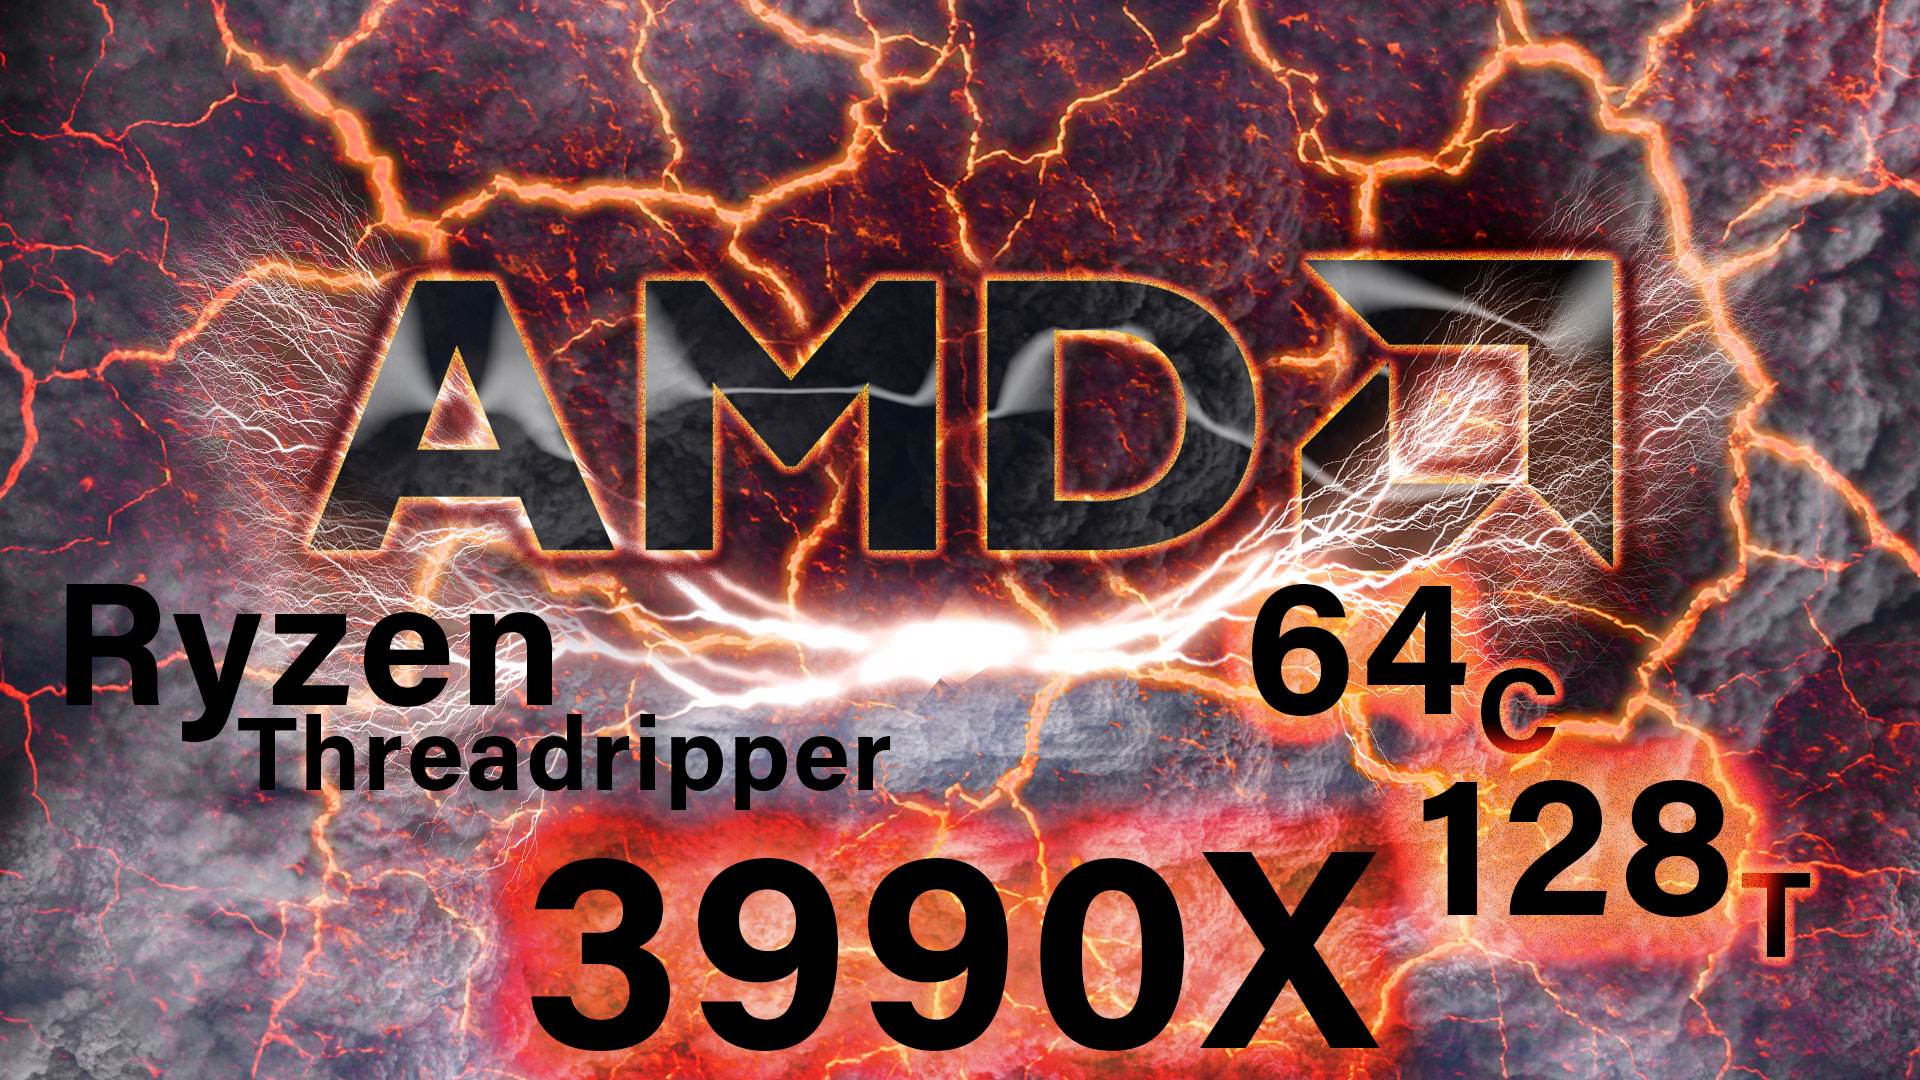 Amd 3990x 登場 スペックは驚異の64コア128スレッド Ryzen Threadripper とりめも